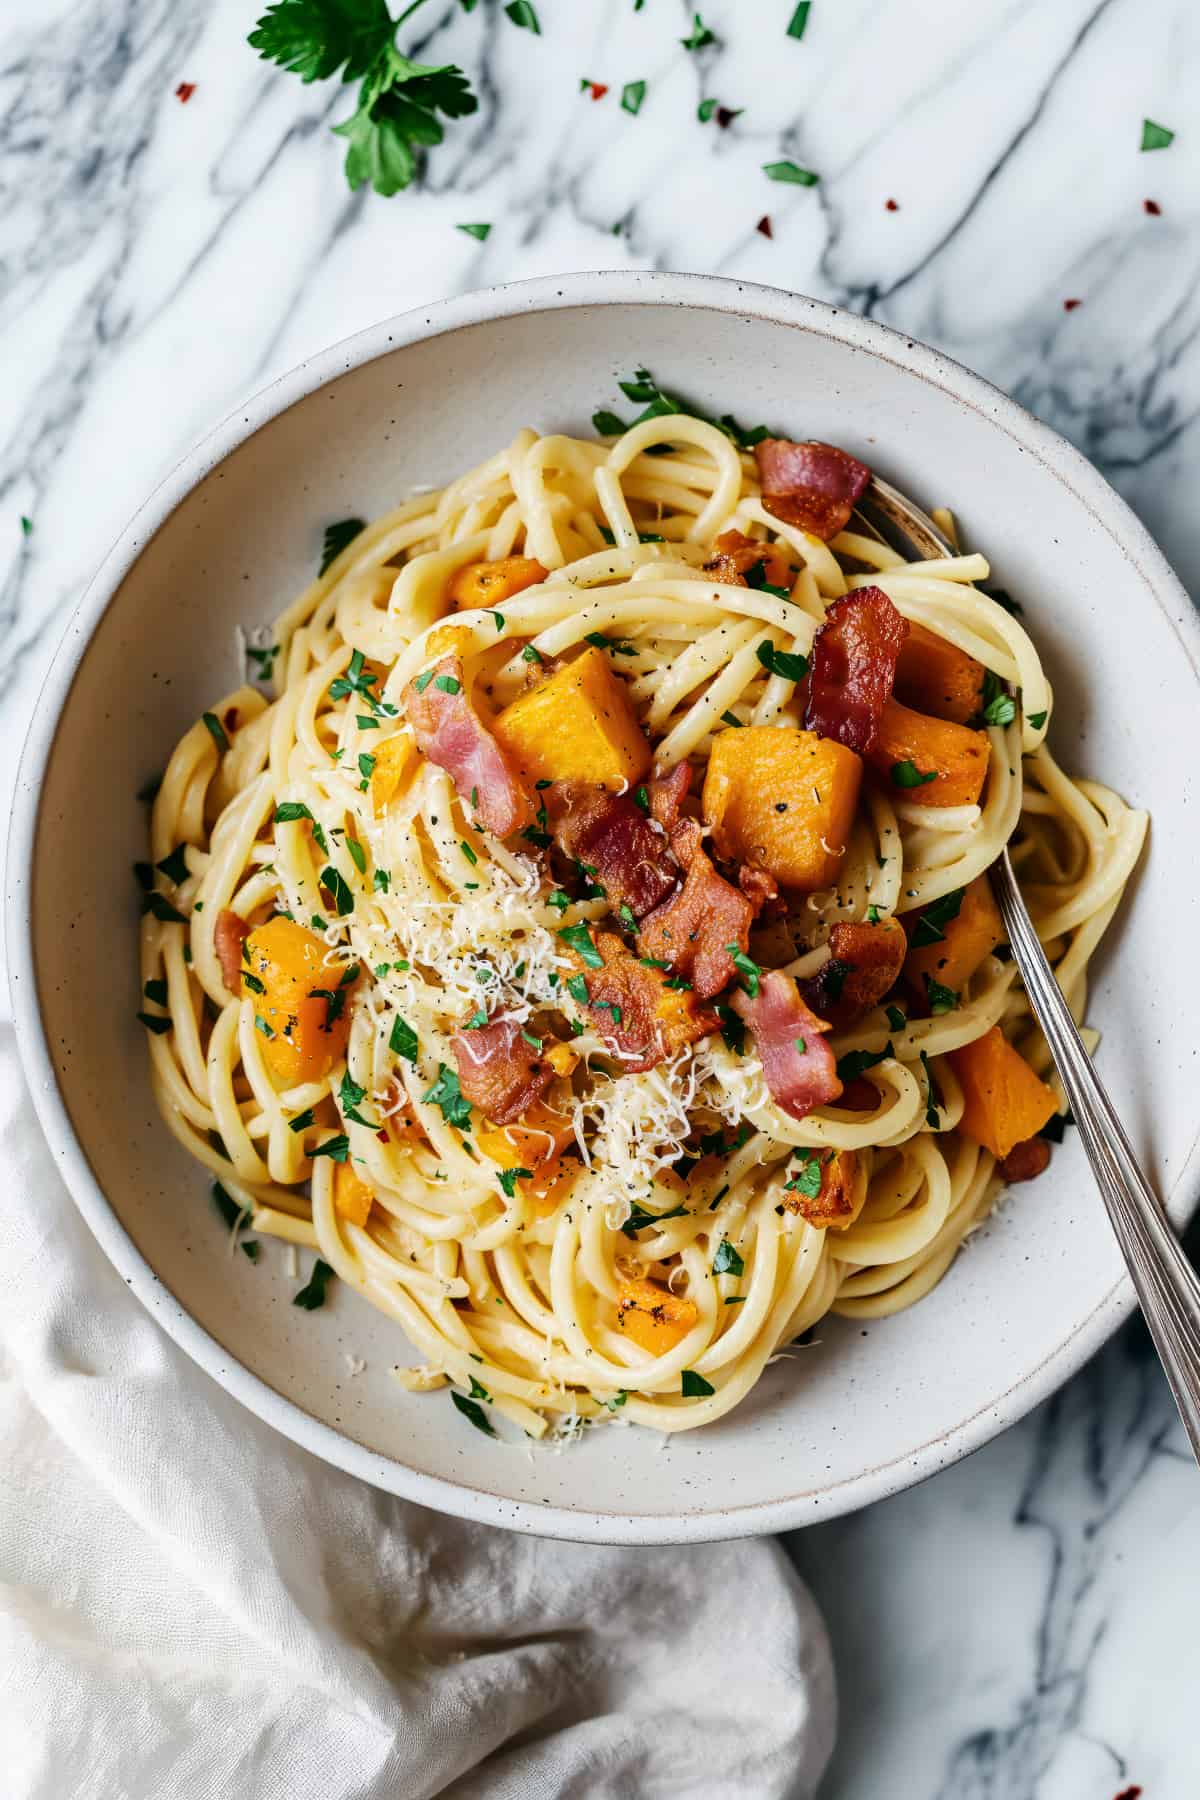 Pumpkin carbonara spaghetti with bacon and herbs.